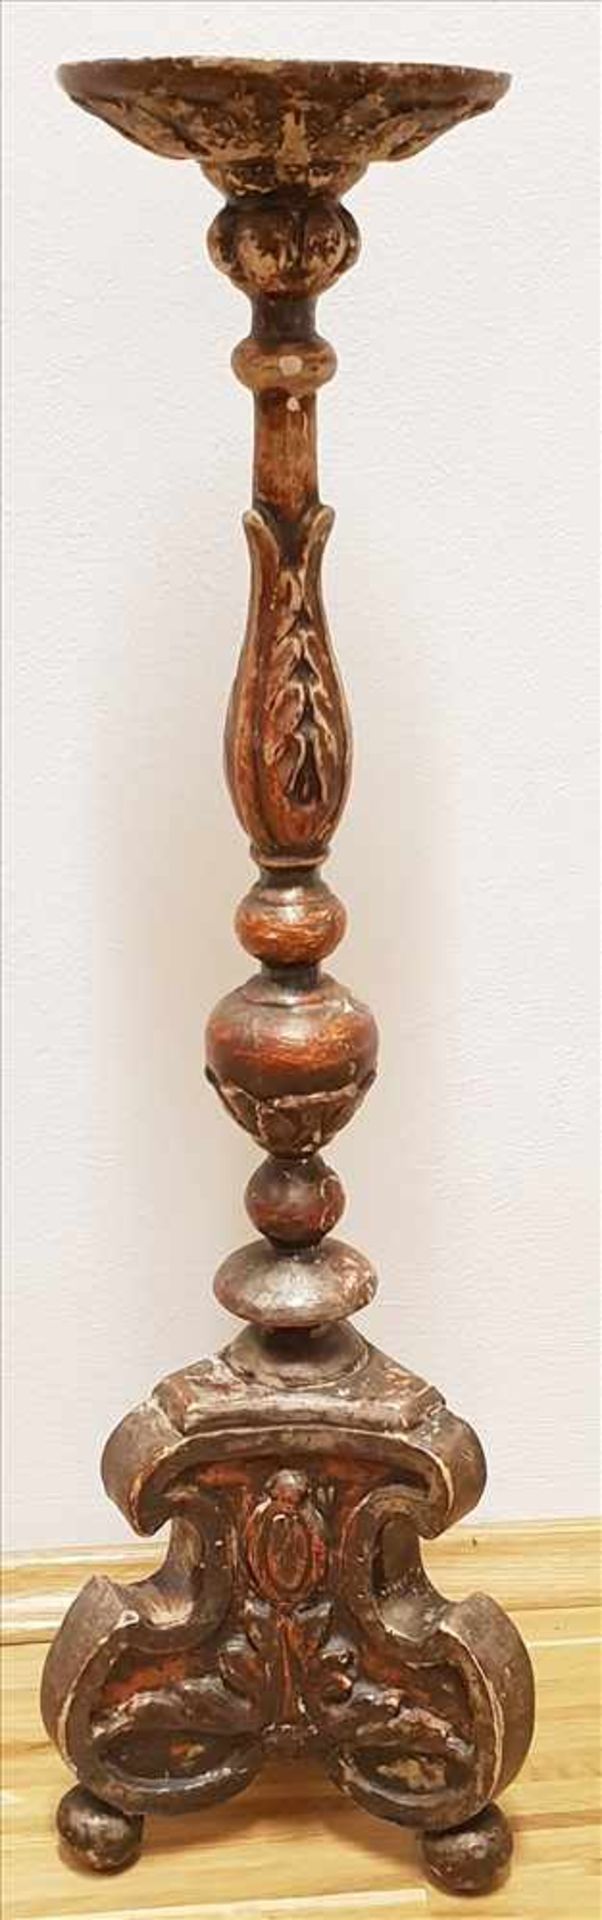 Barocker Leuchter 18. Jh.,aus Holz geschnitzt, polychrom gefasst, Höhe ca. 57,5 cm,